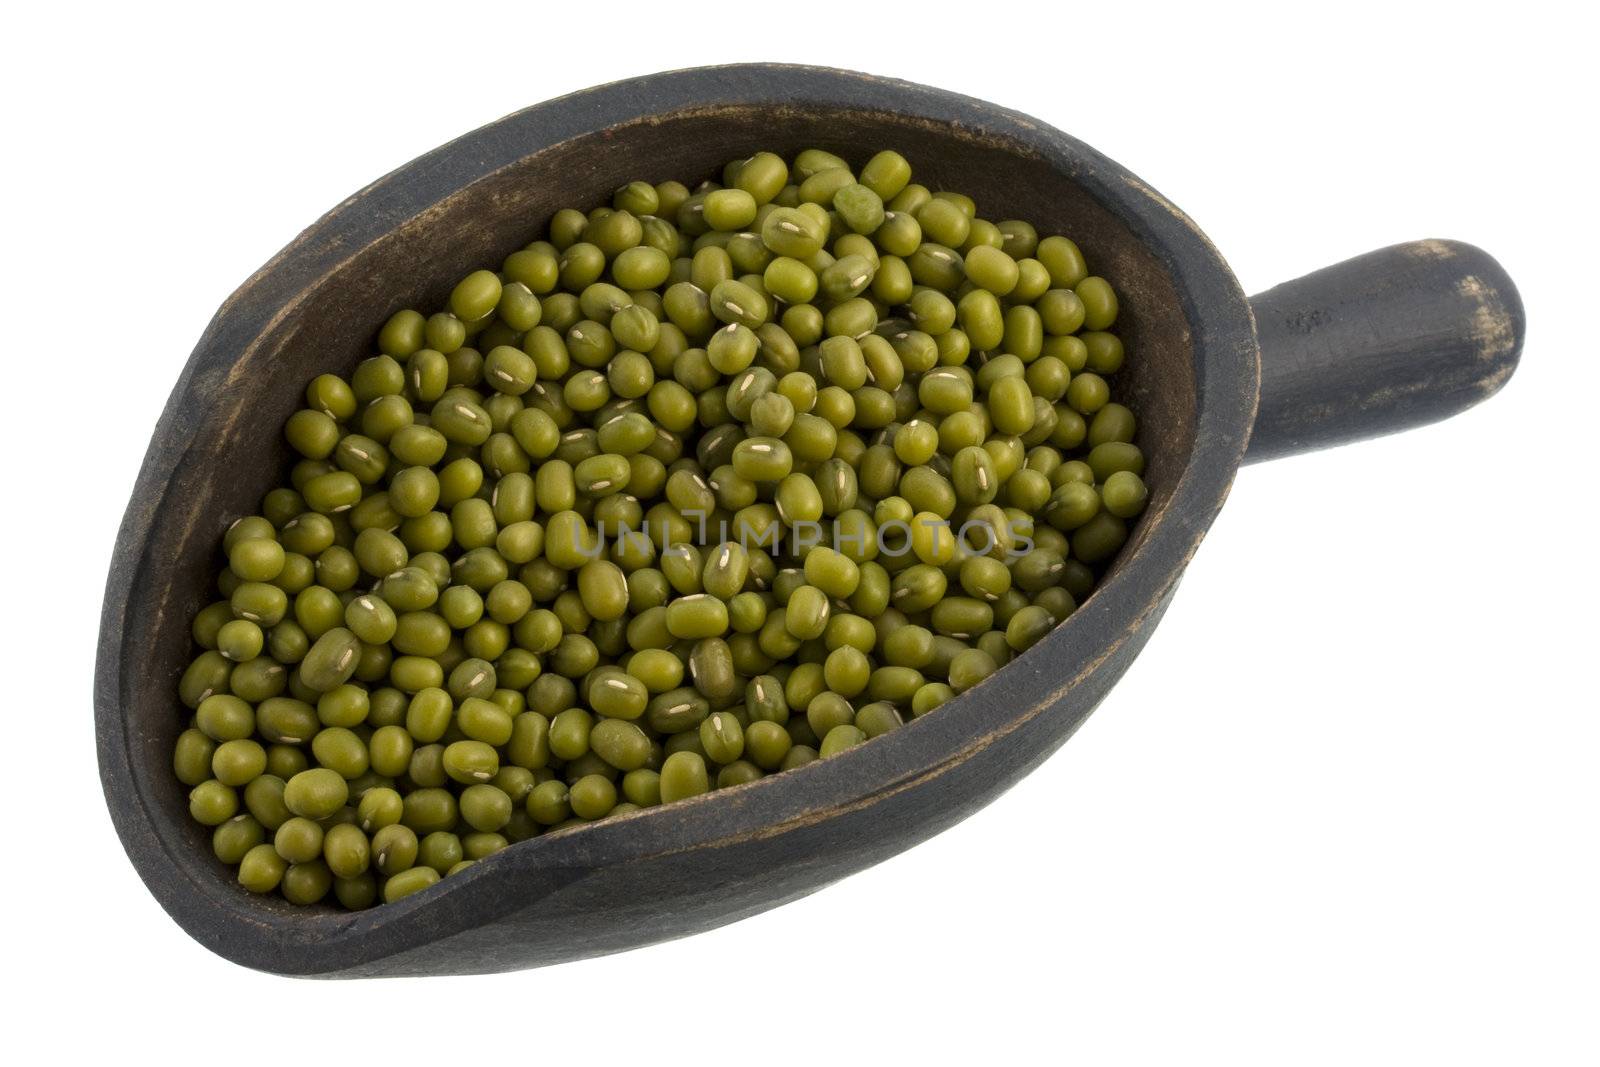 scoop of mung beans by PixelsAway